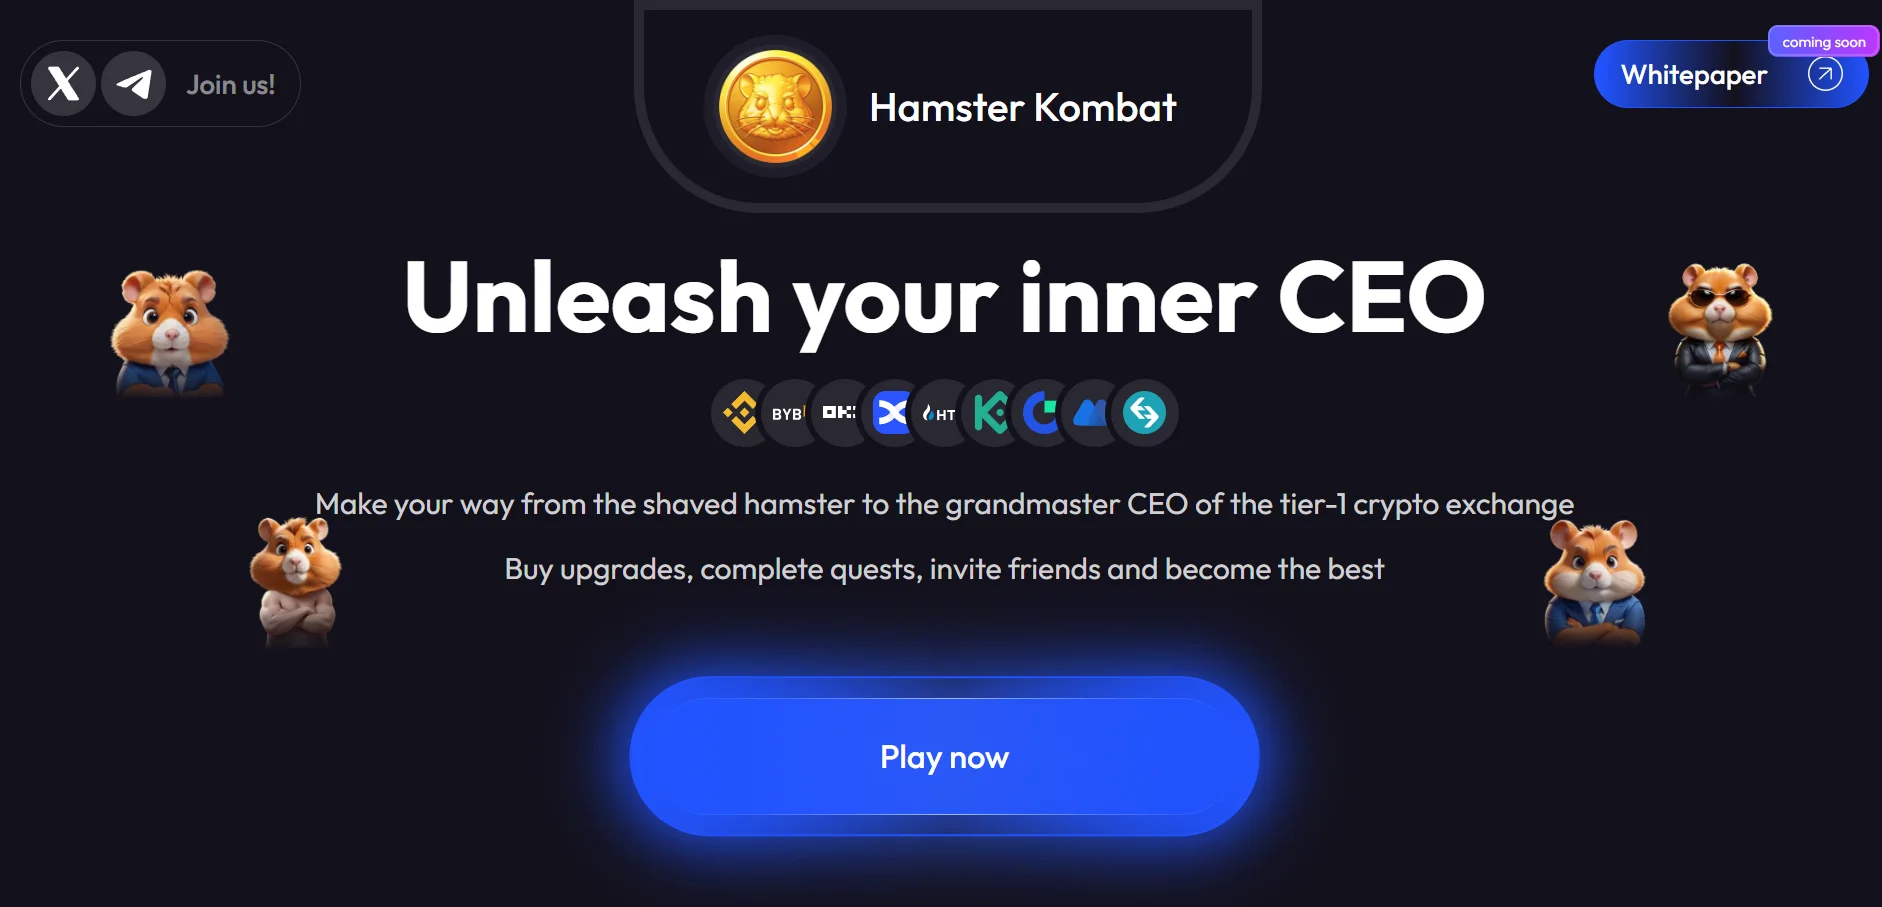 Hamster Kombat Review: Is It Legit Or Not?